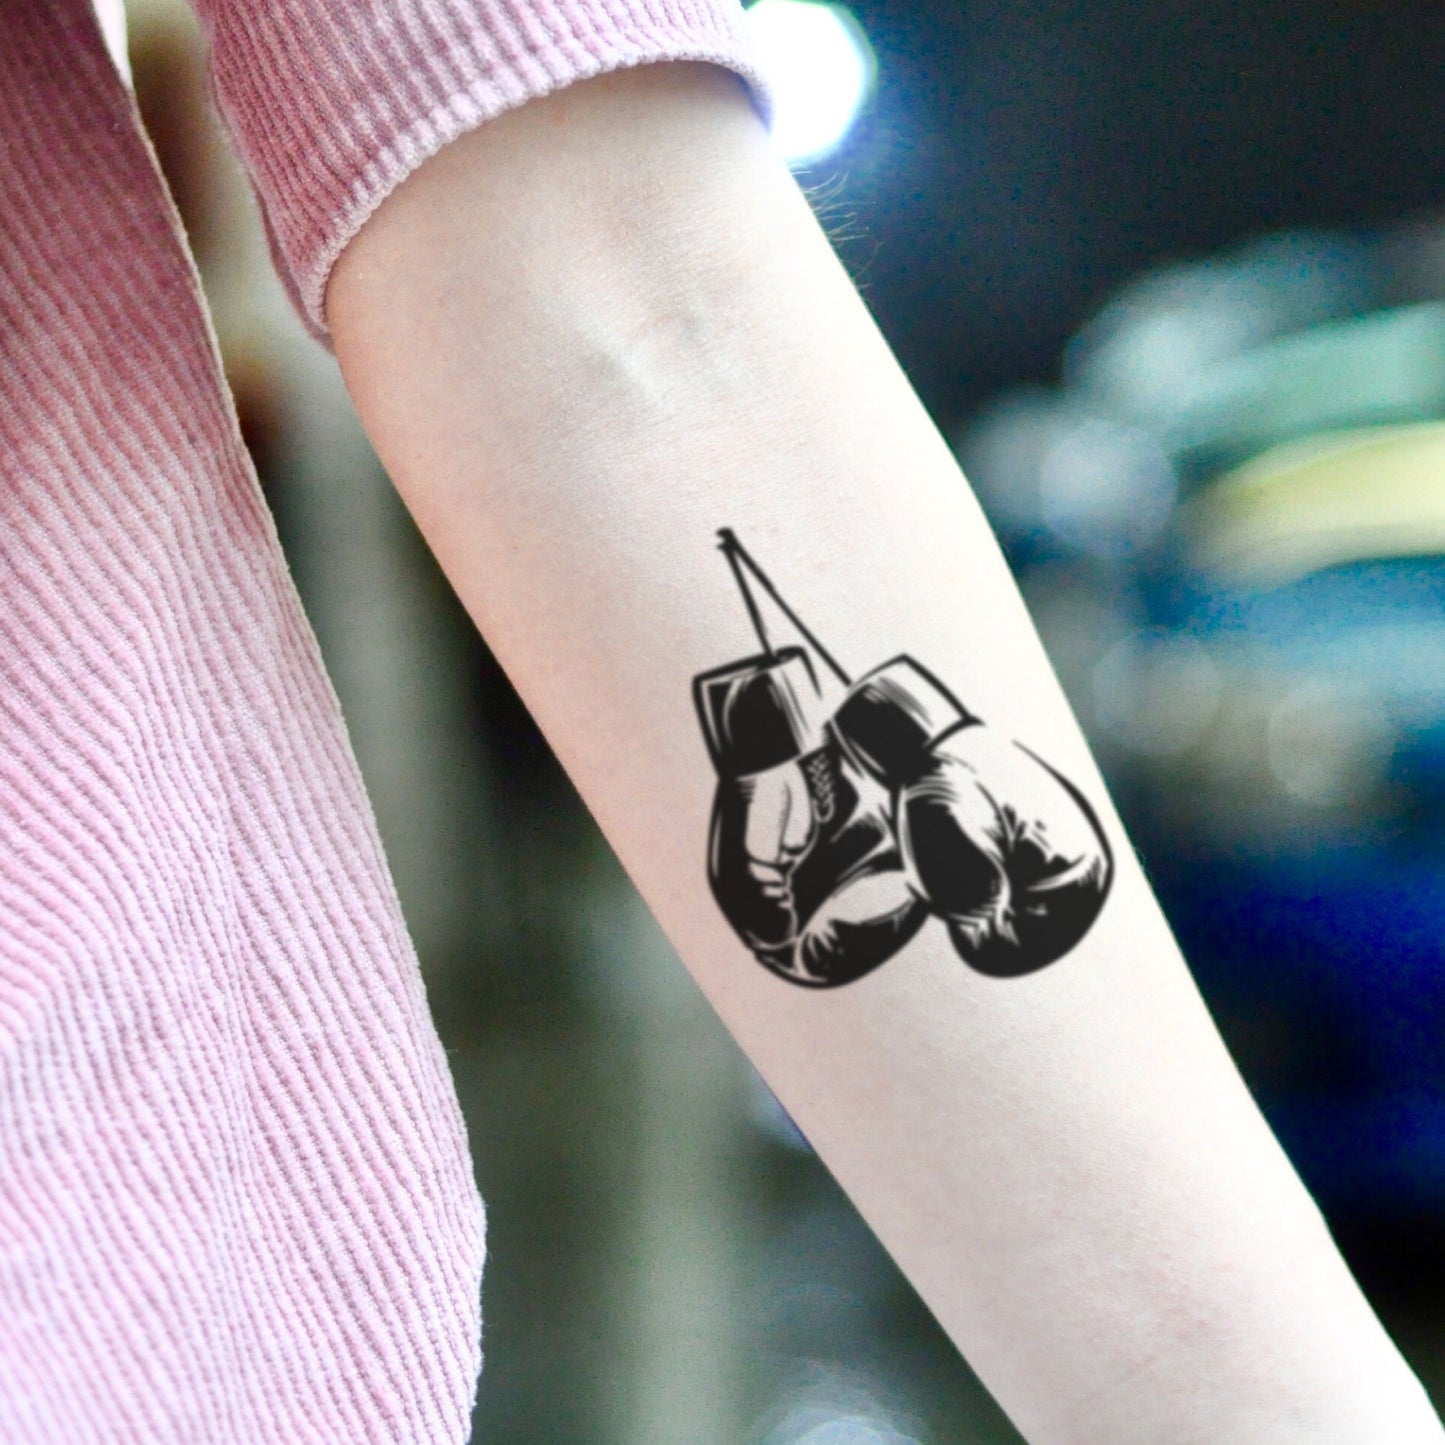 fake small boxing gloves illustrative temporary tattoo sticker design idea on inner arm